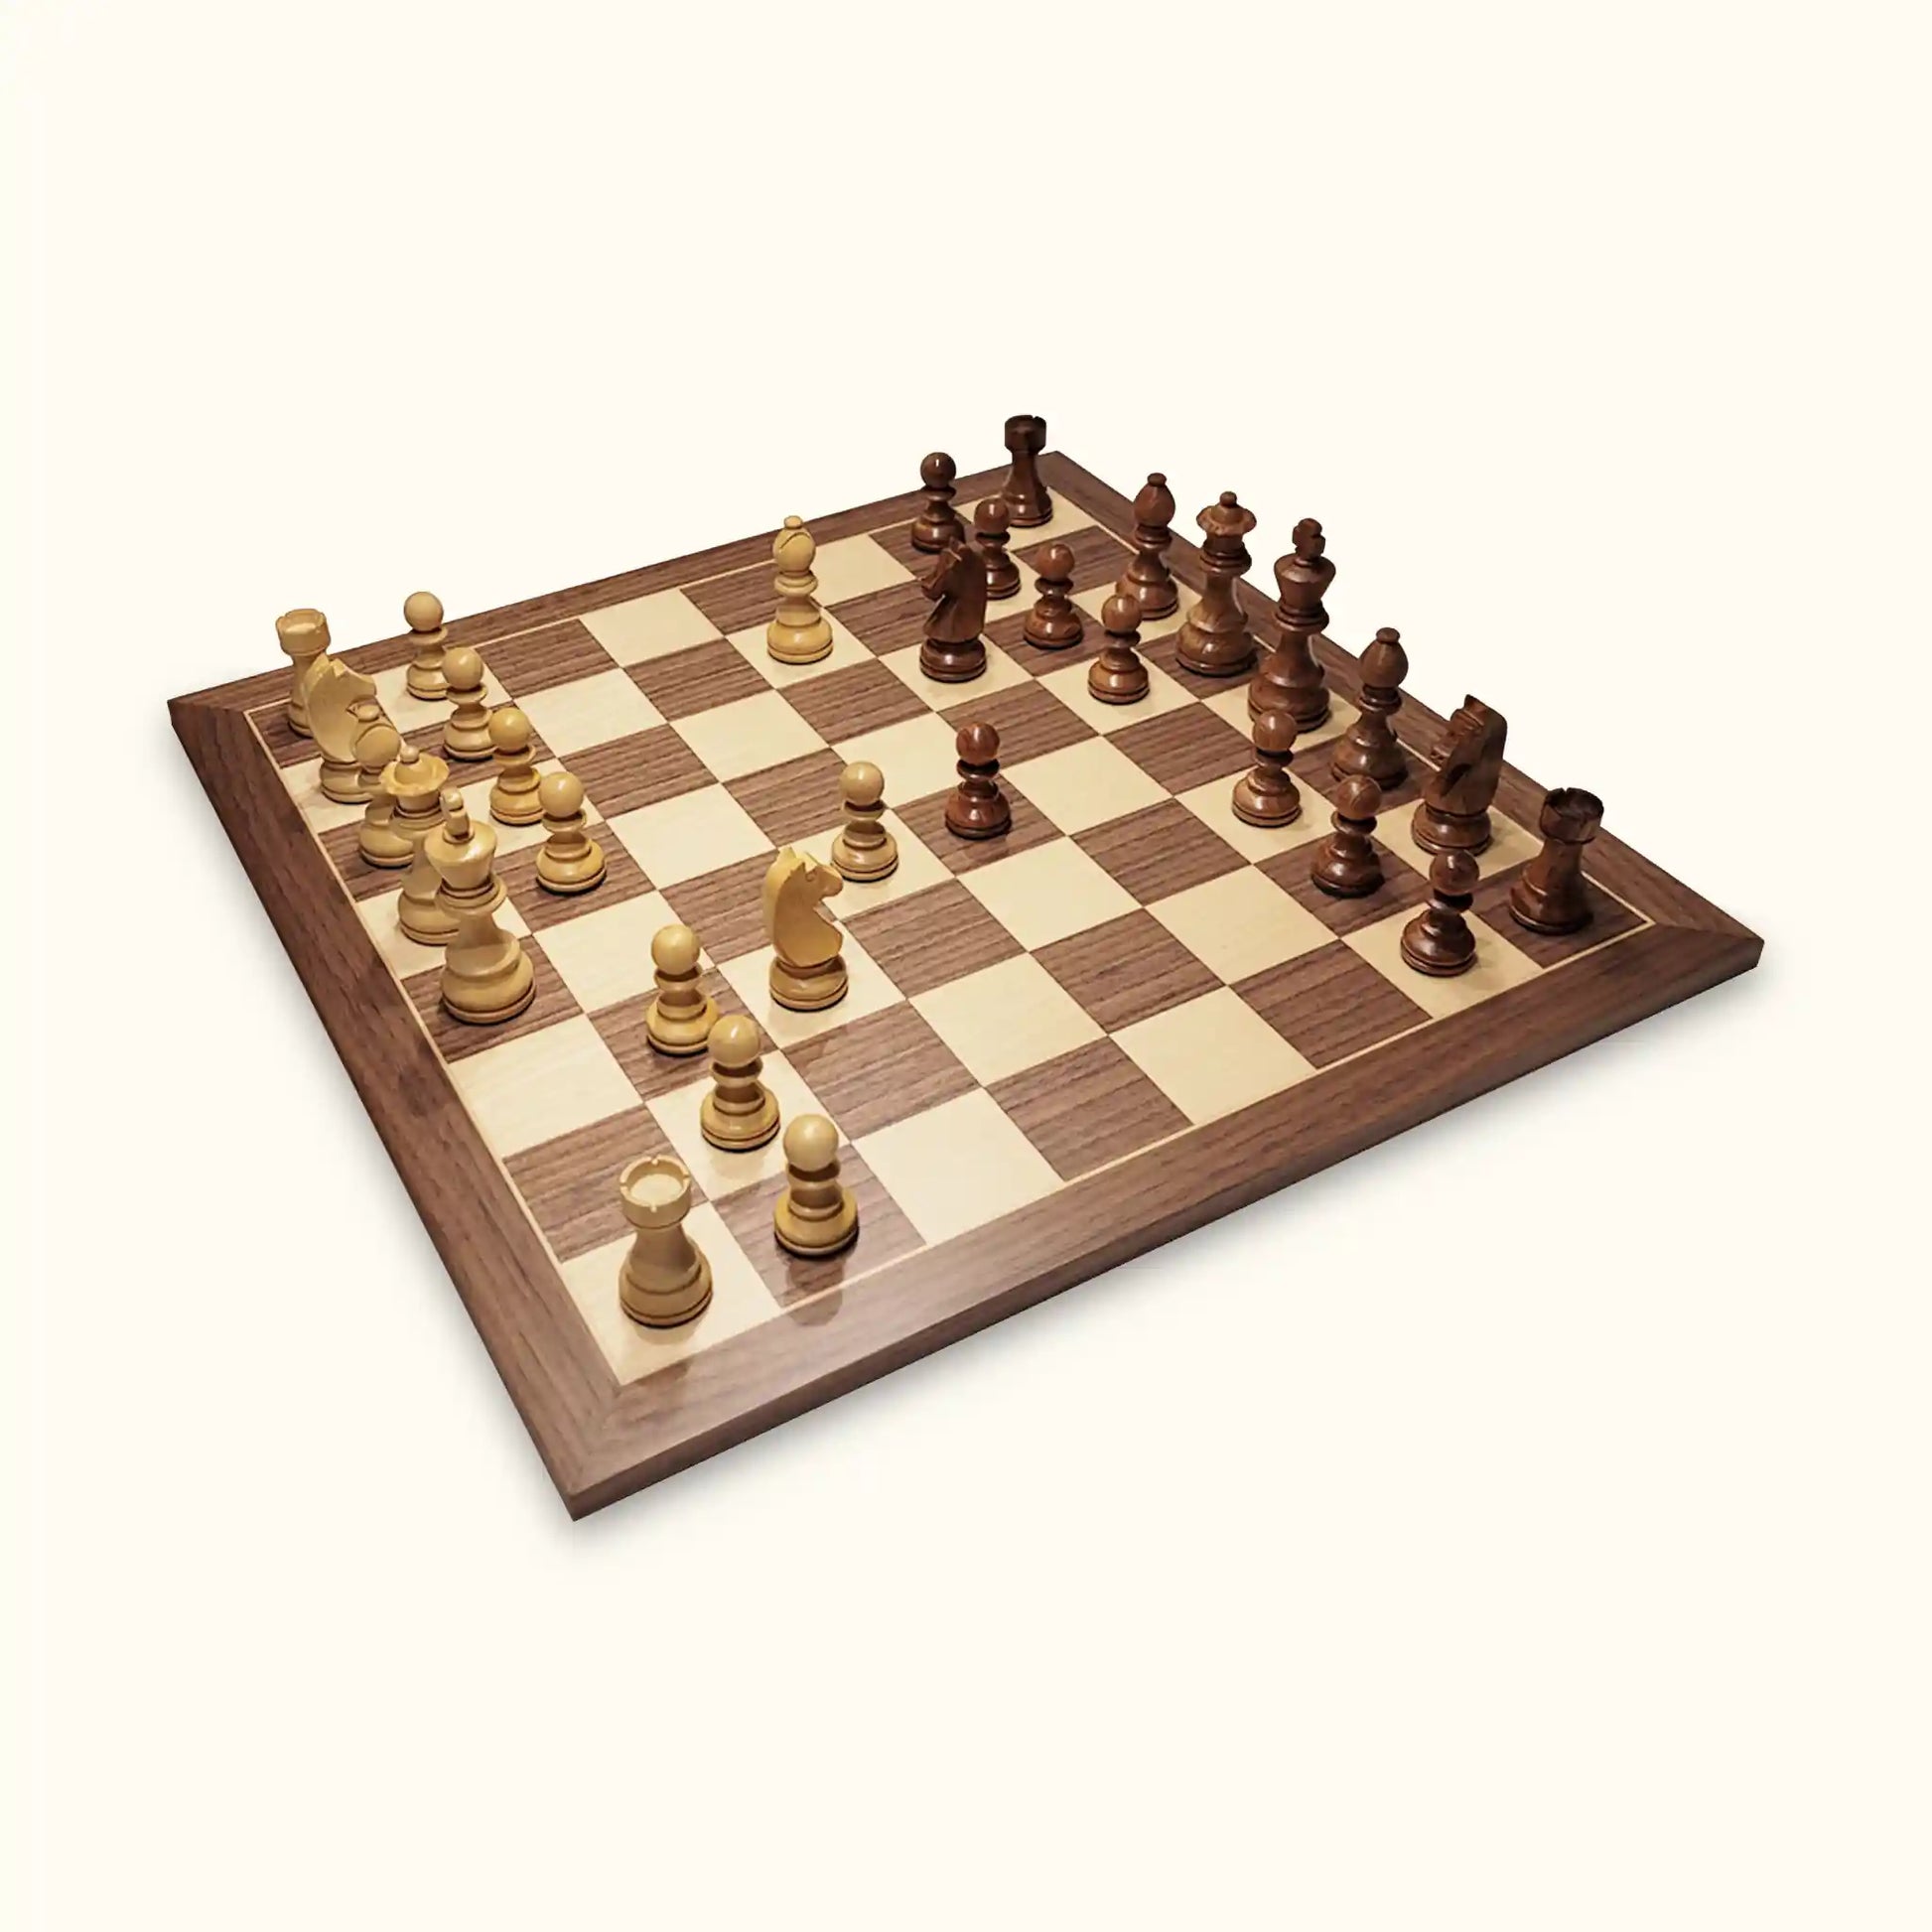 Chessboard walnut standard with chess pieces german knight diagonal